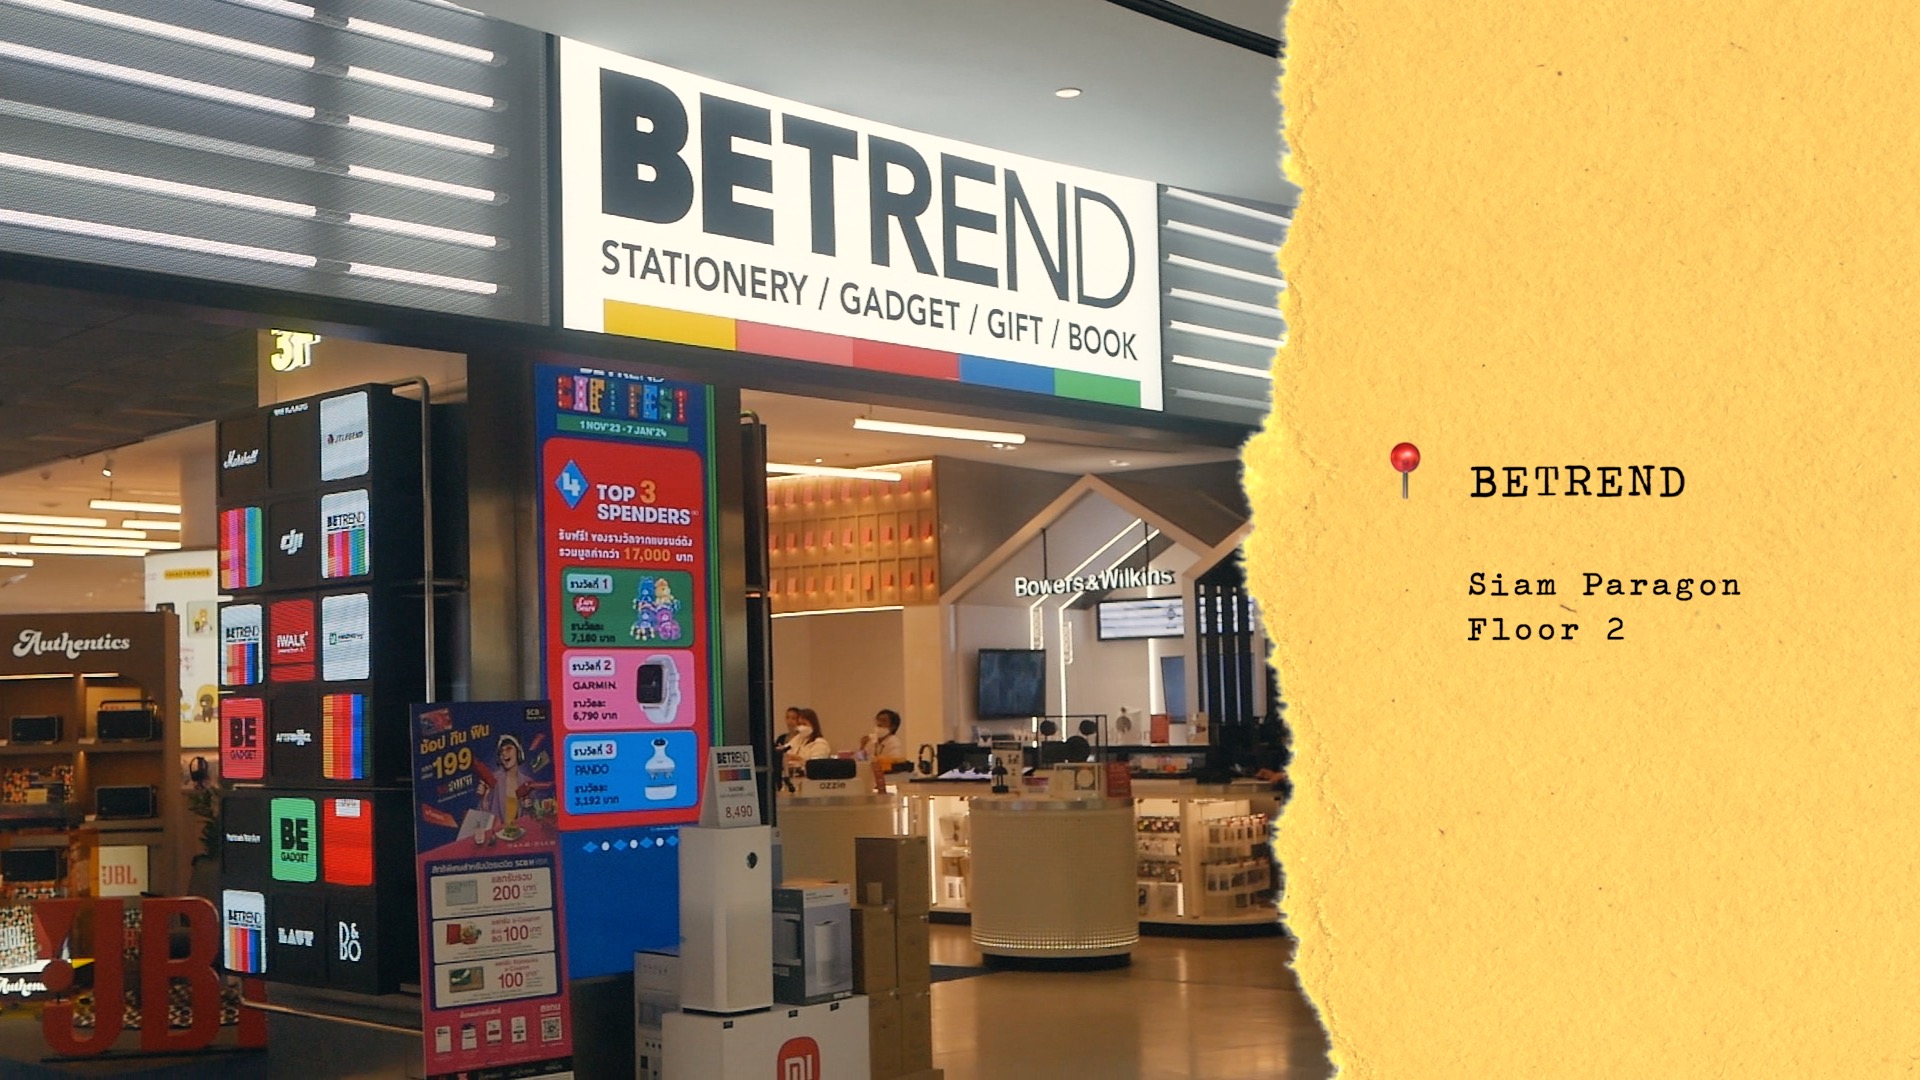 Bangkok Stationery Shops #2 - BeTrend